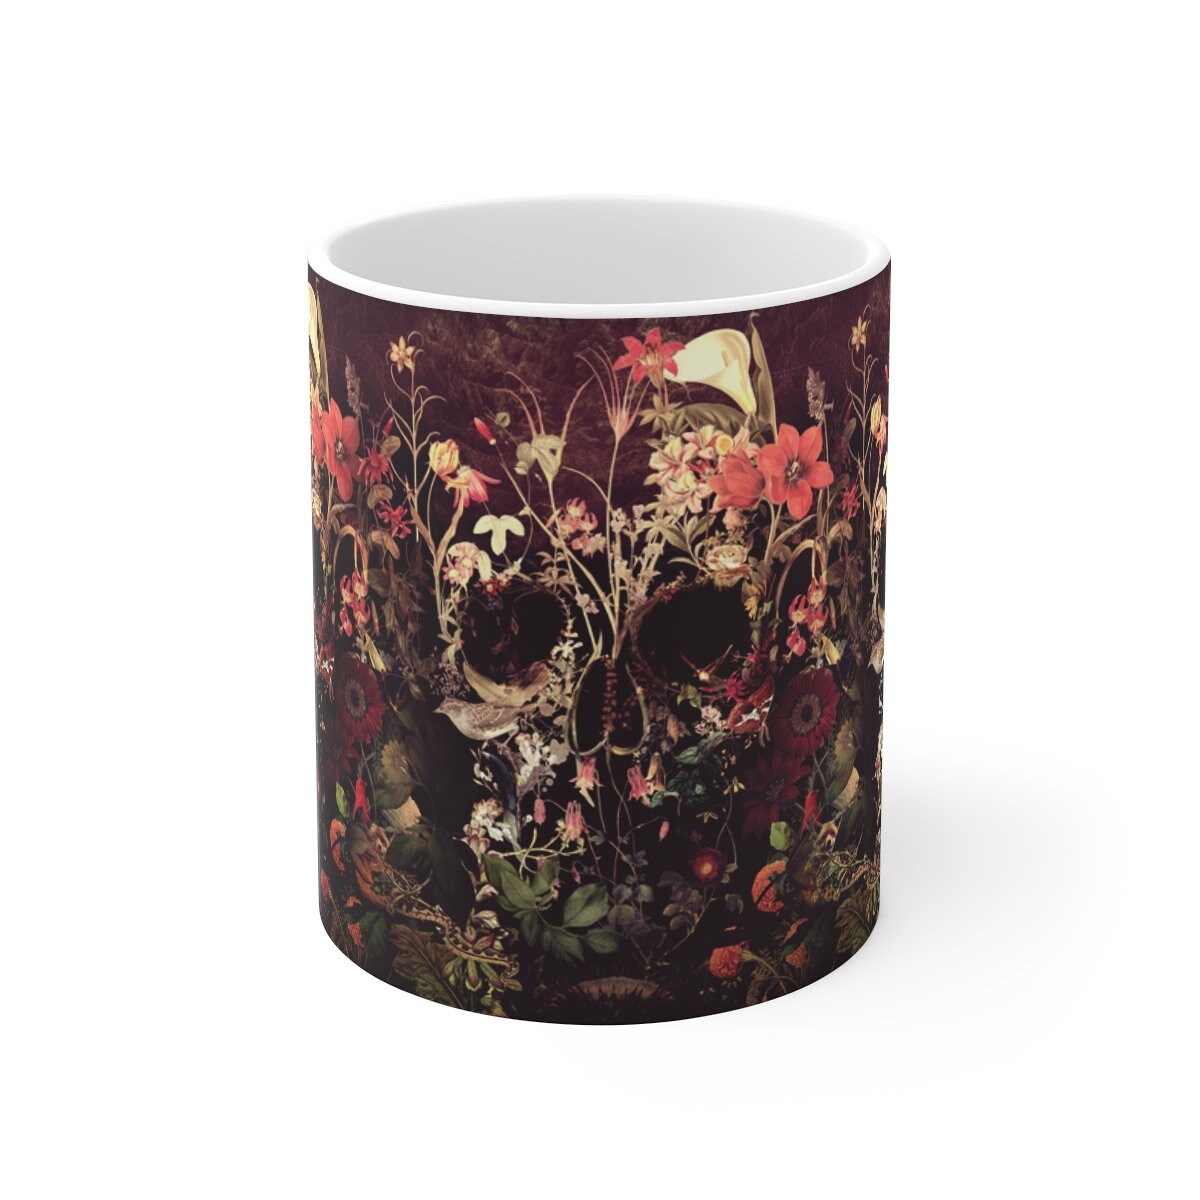 Floral Skull Mug, Flower Sugar Skull Mug Gift, Boho Skull Ceramic Coffee Mug, Gothic Skull Art Drawing Mug